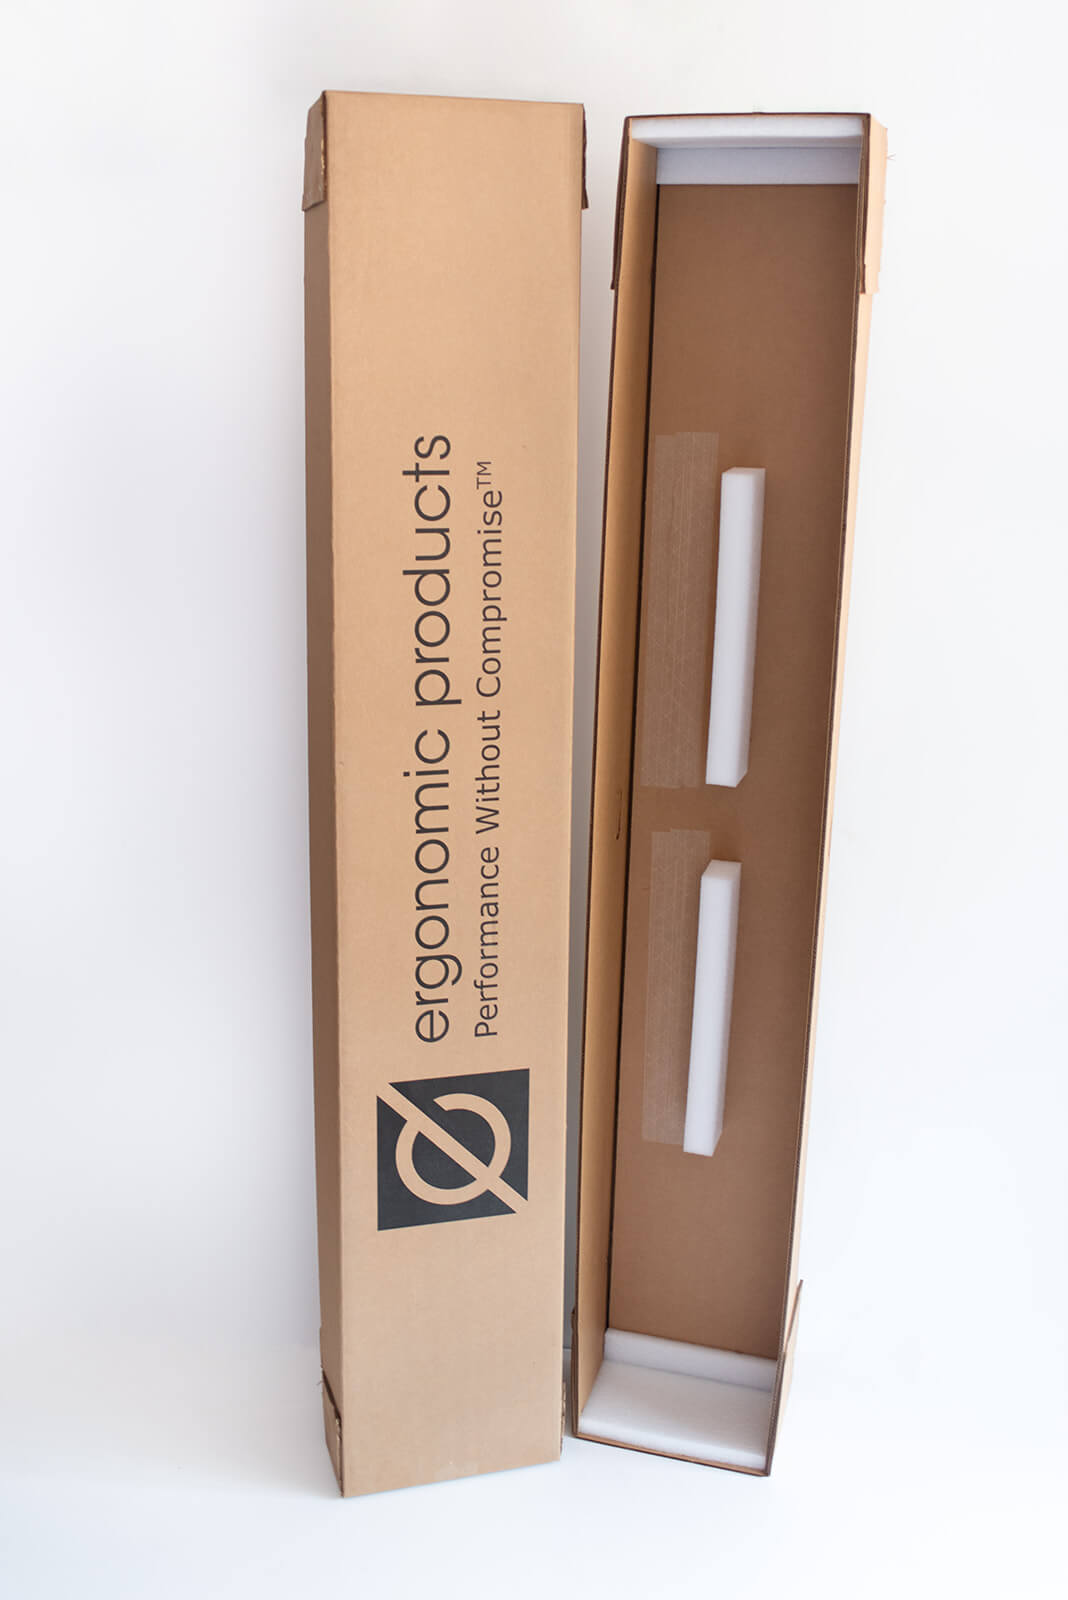 Ergonomic products cardboard box